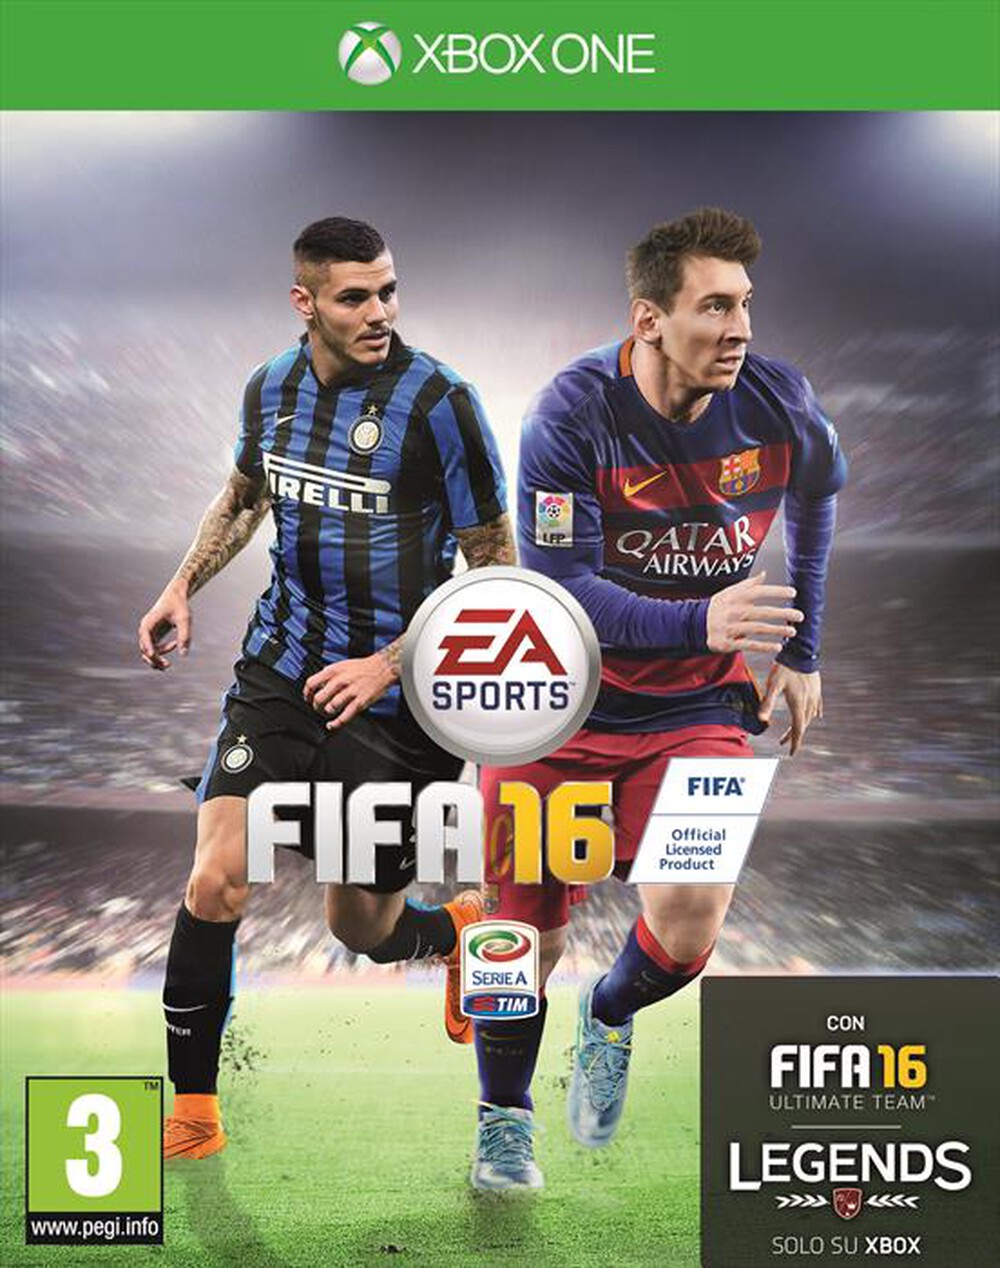 "ELECTRONIC ARTS - FIFA 16 Xbox One"